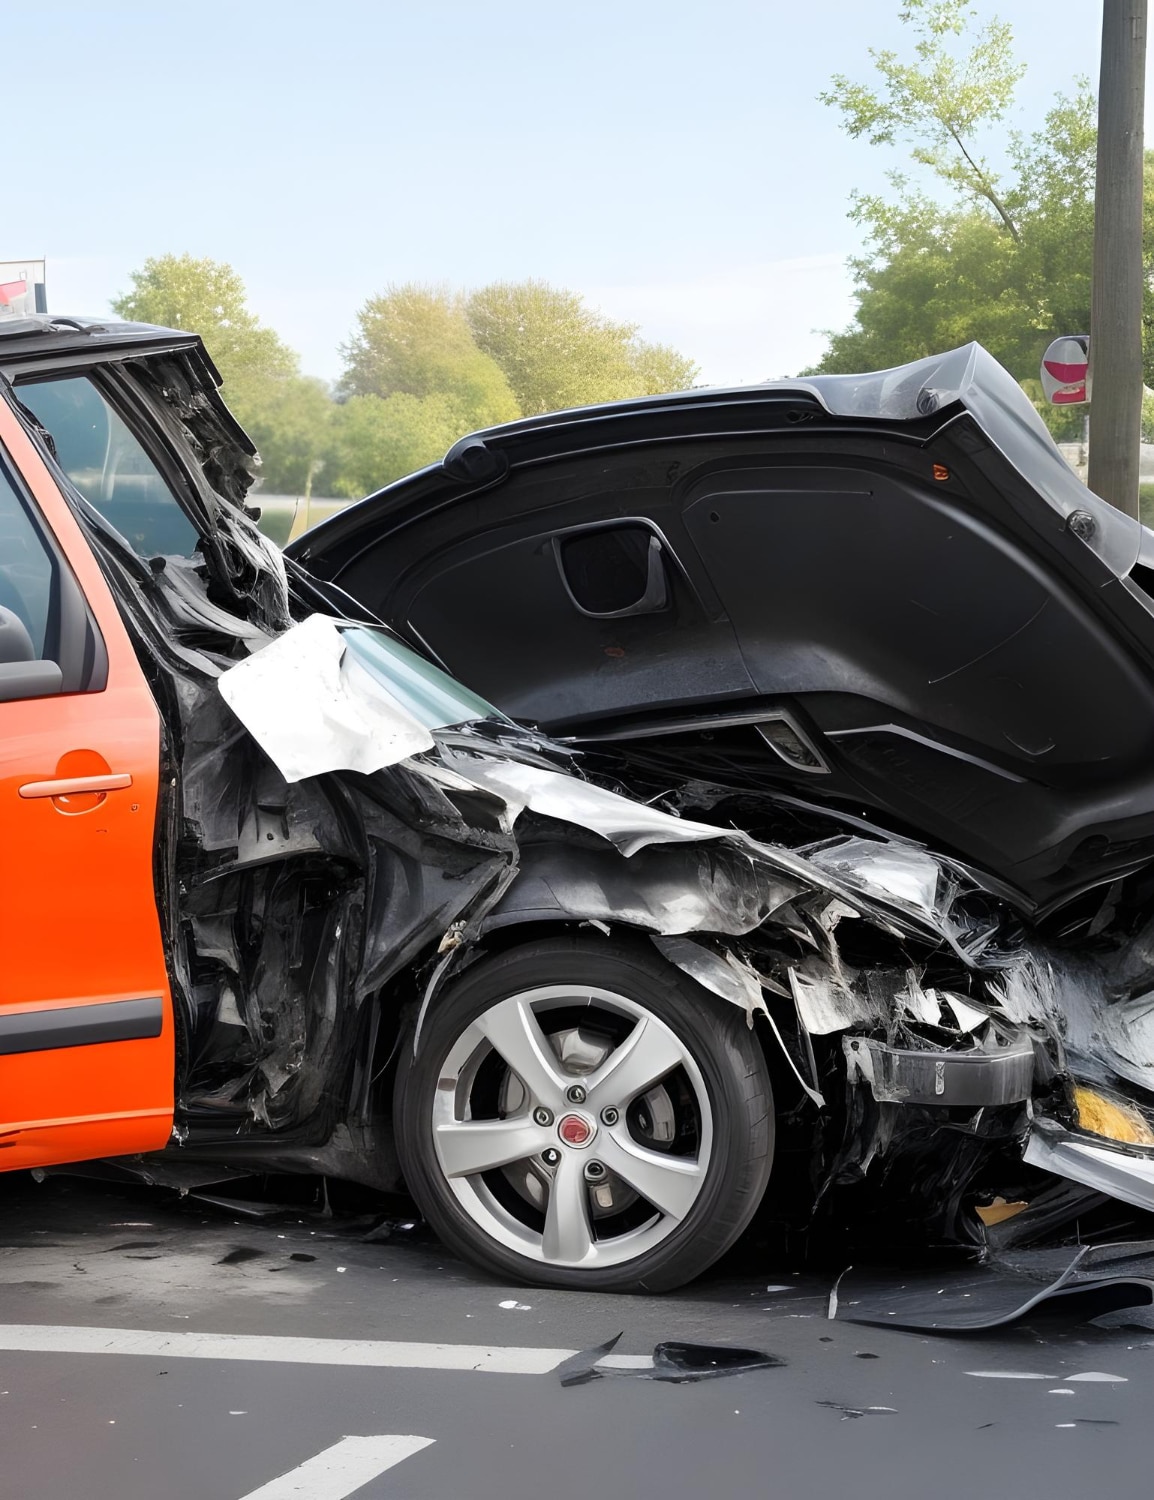 Incapacitating Car Accident Injuries